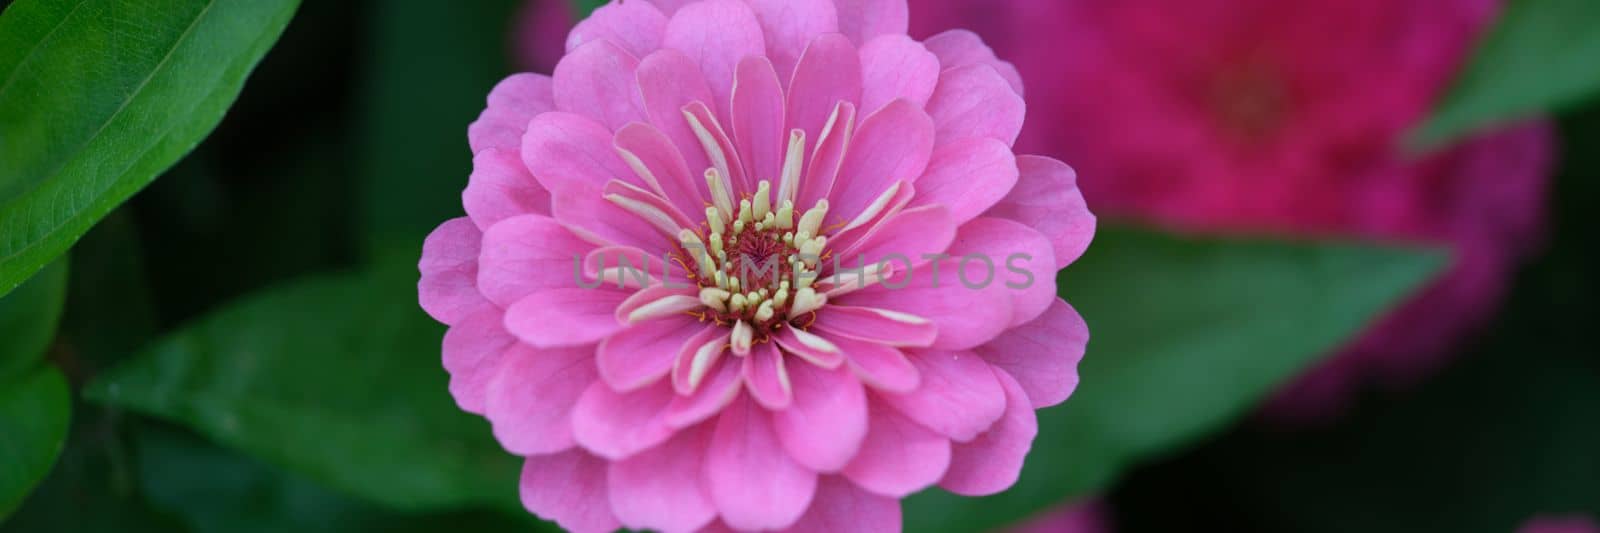 Pink dahlia flower in garden closeup. Beautiful pink flower by kuprevich